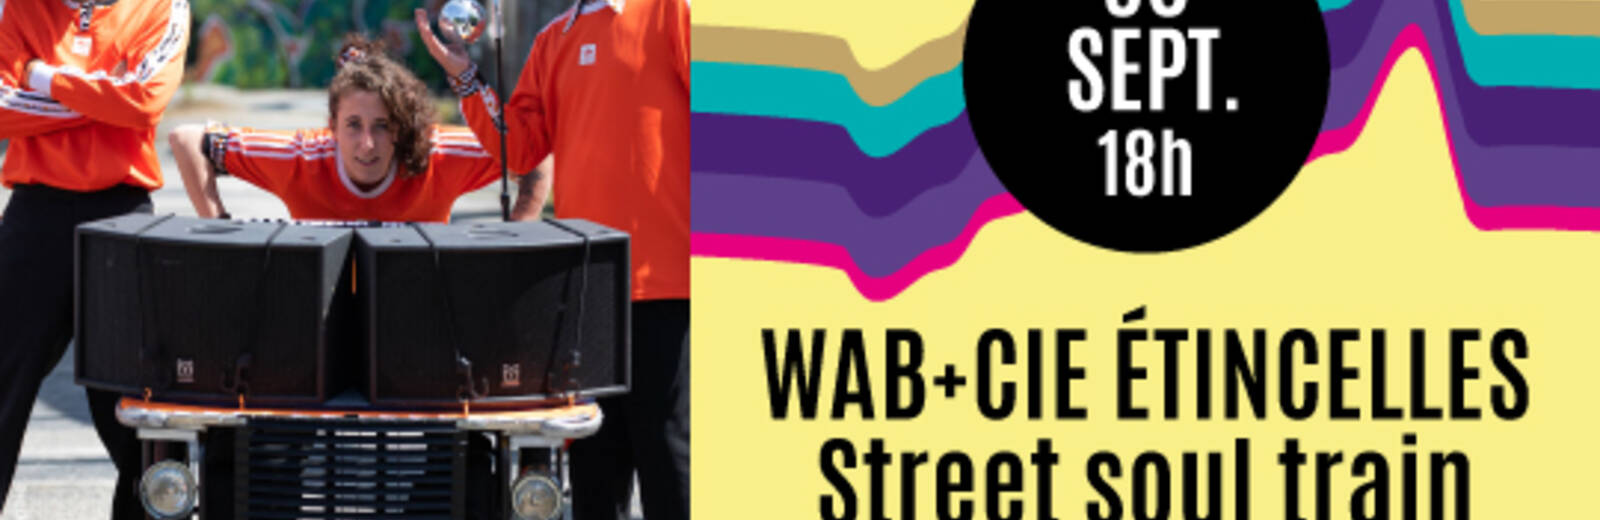 Wab, Cie Étincelles - Street soul train 